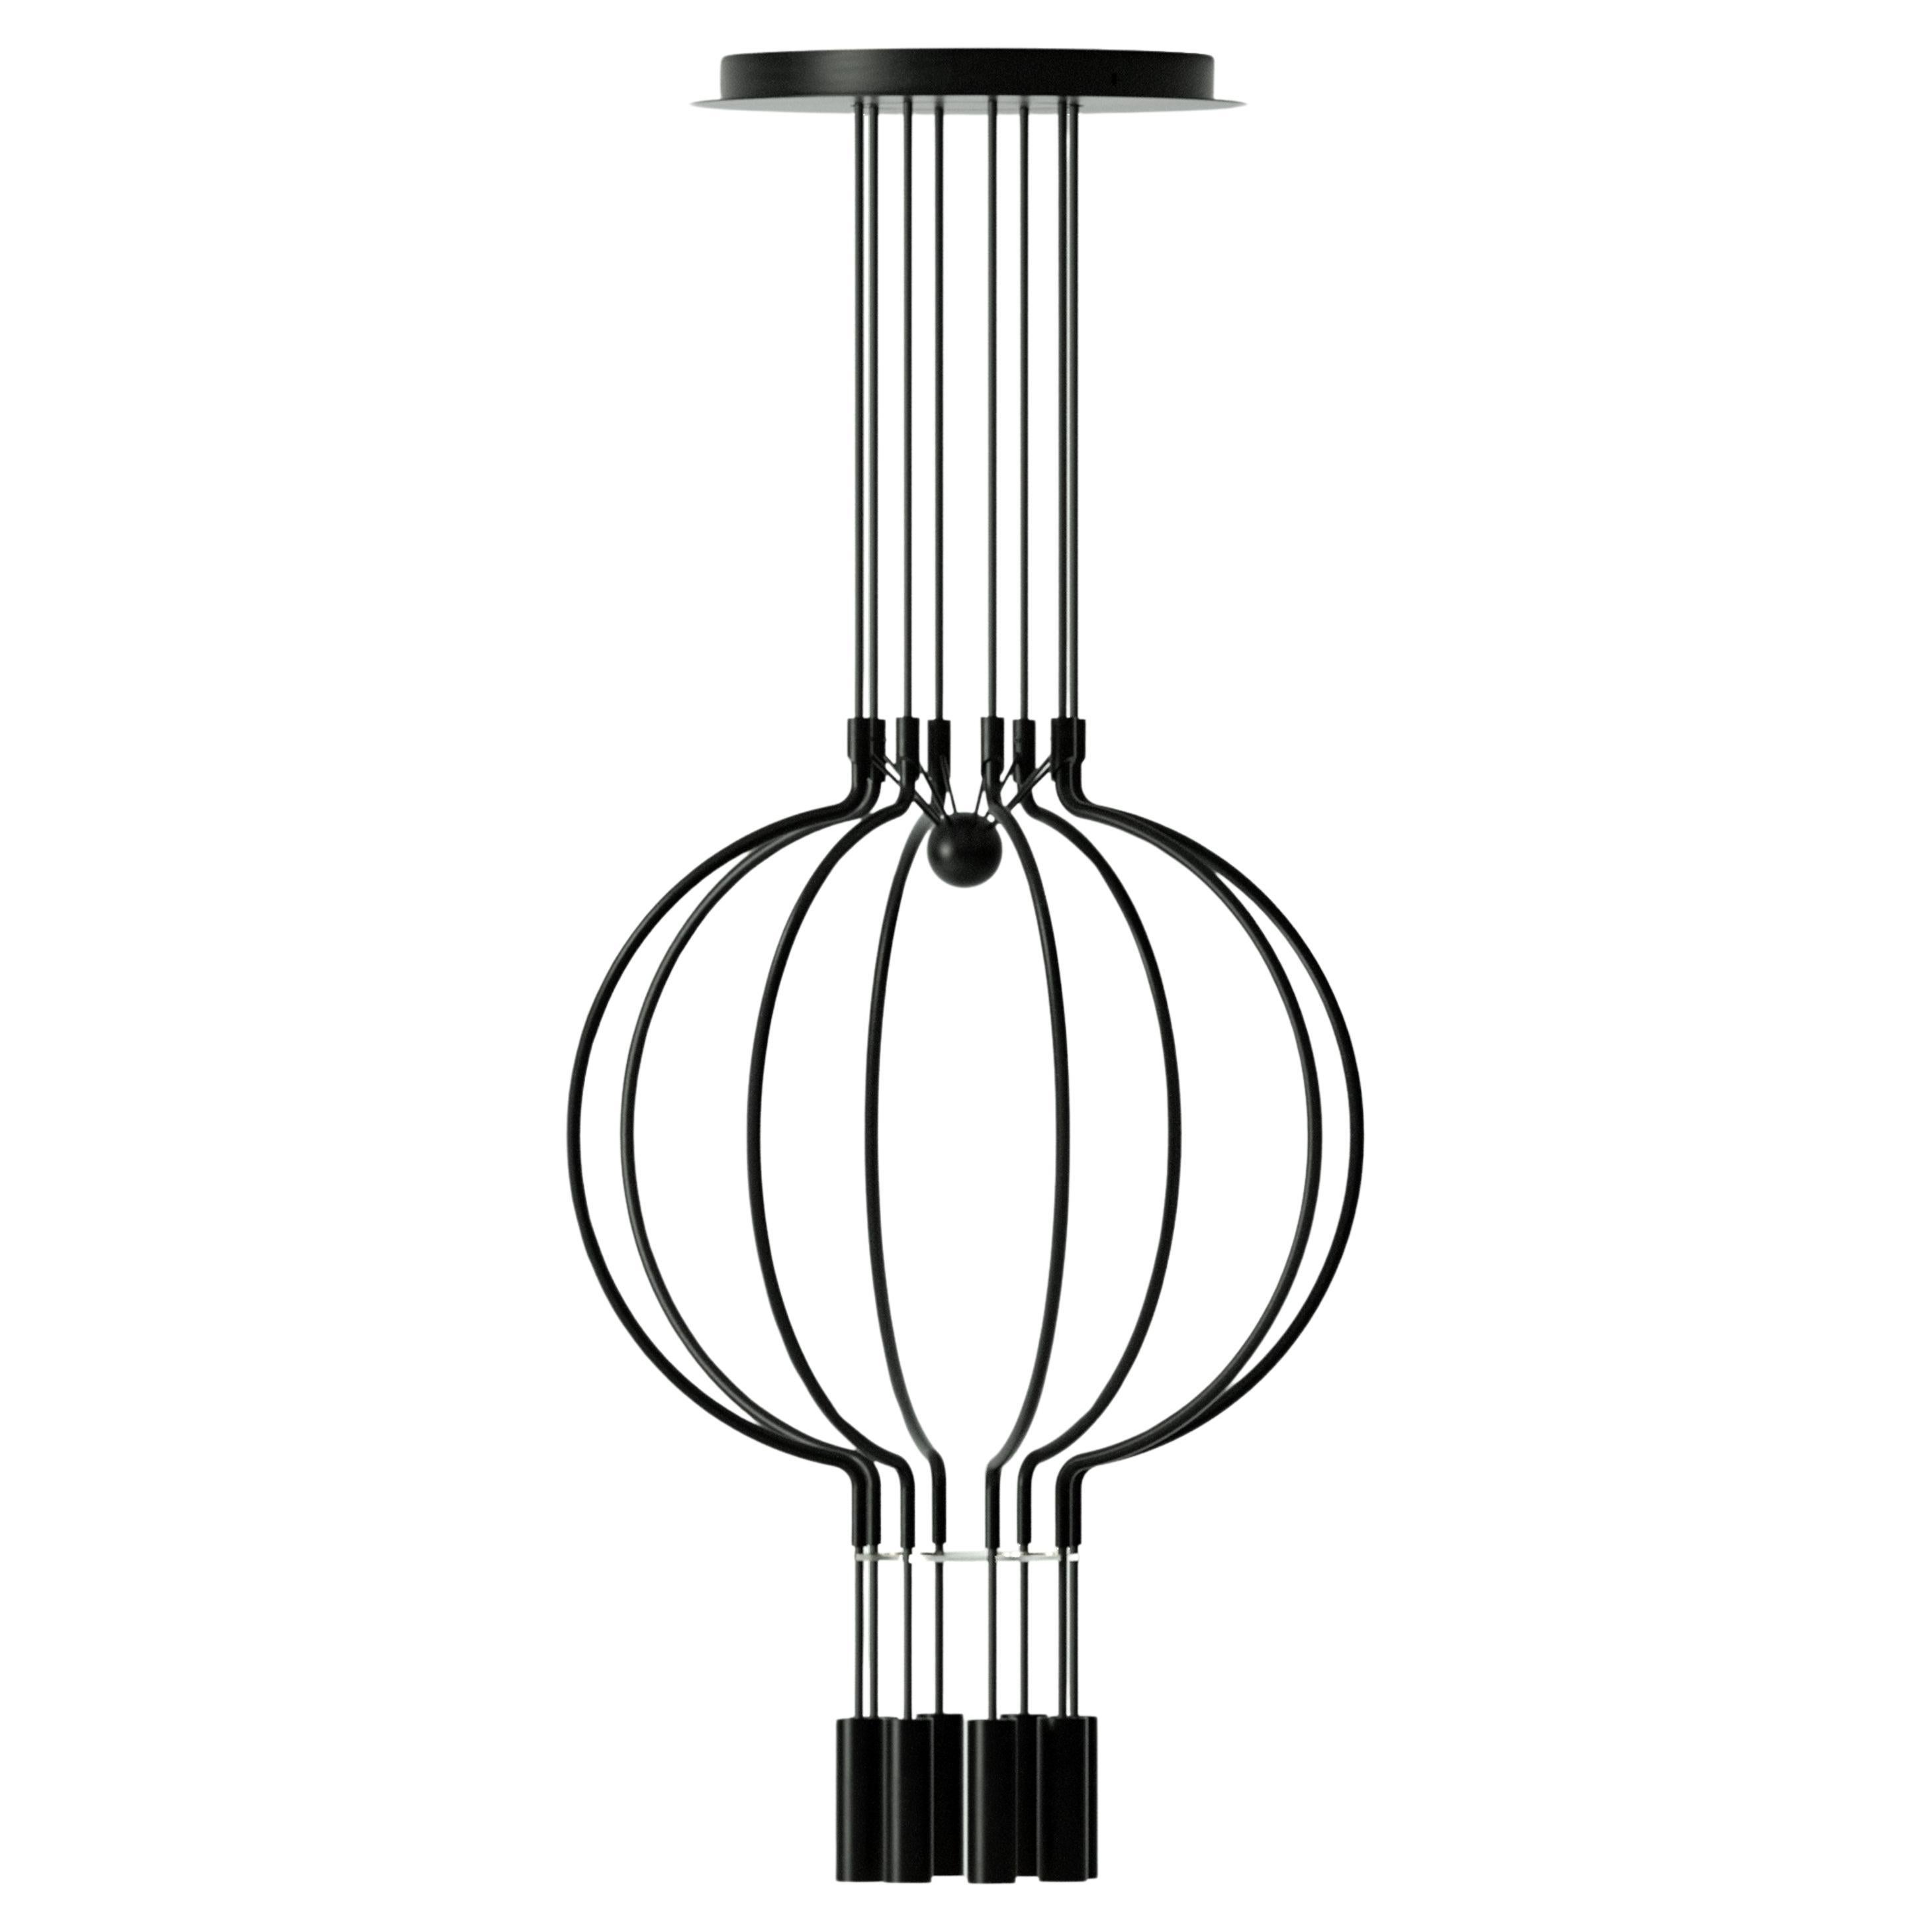 Axolight Liaison Model P8 Pendant Lamp in Black/Black by Sara Moroni